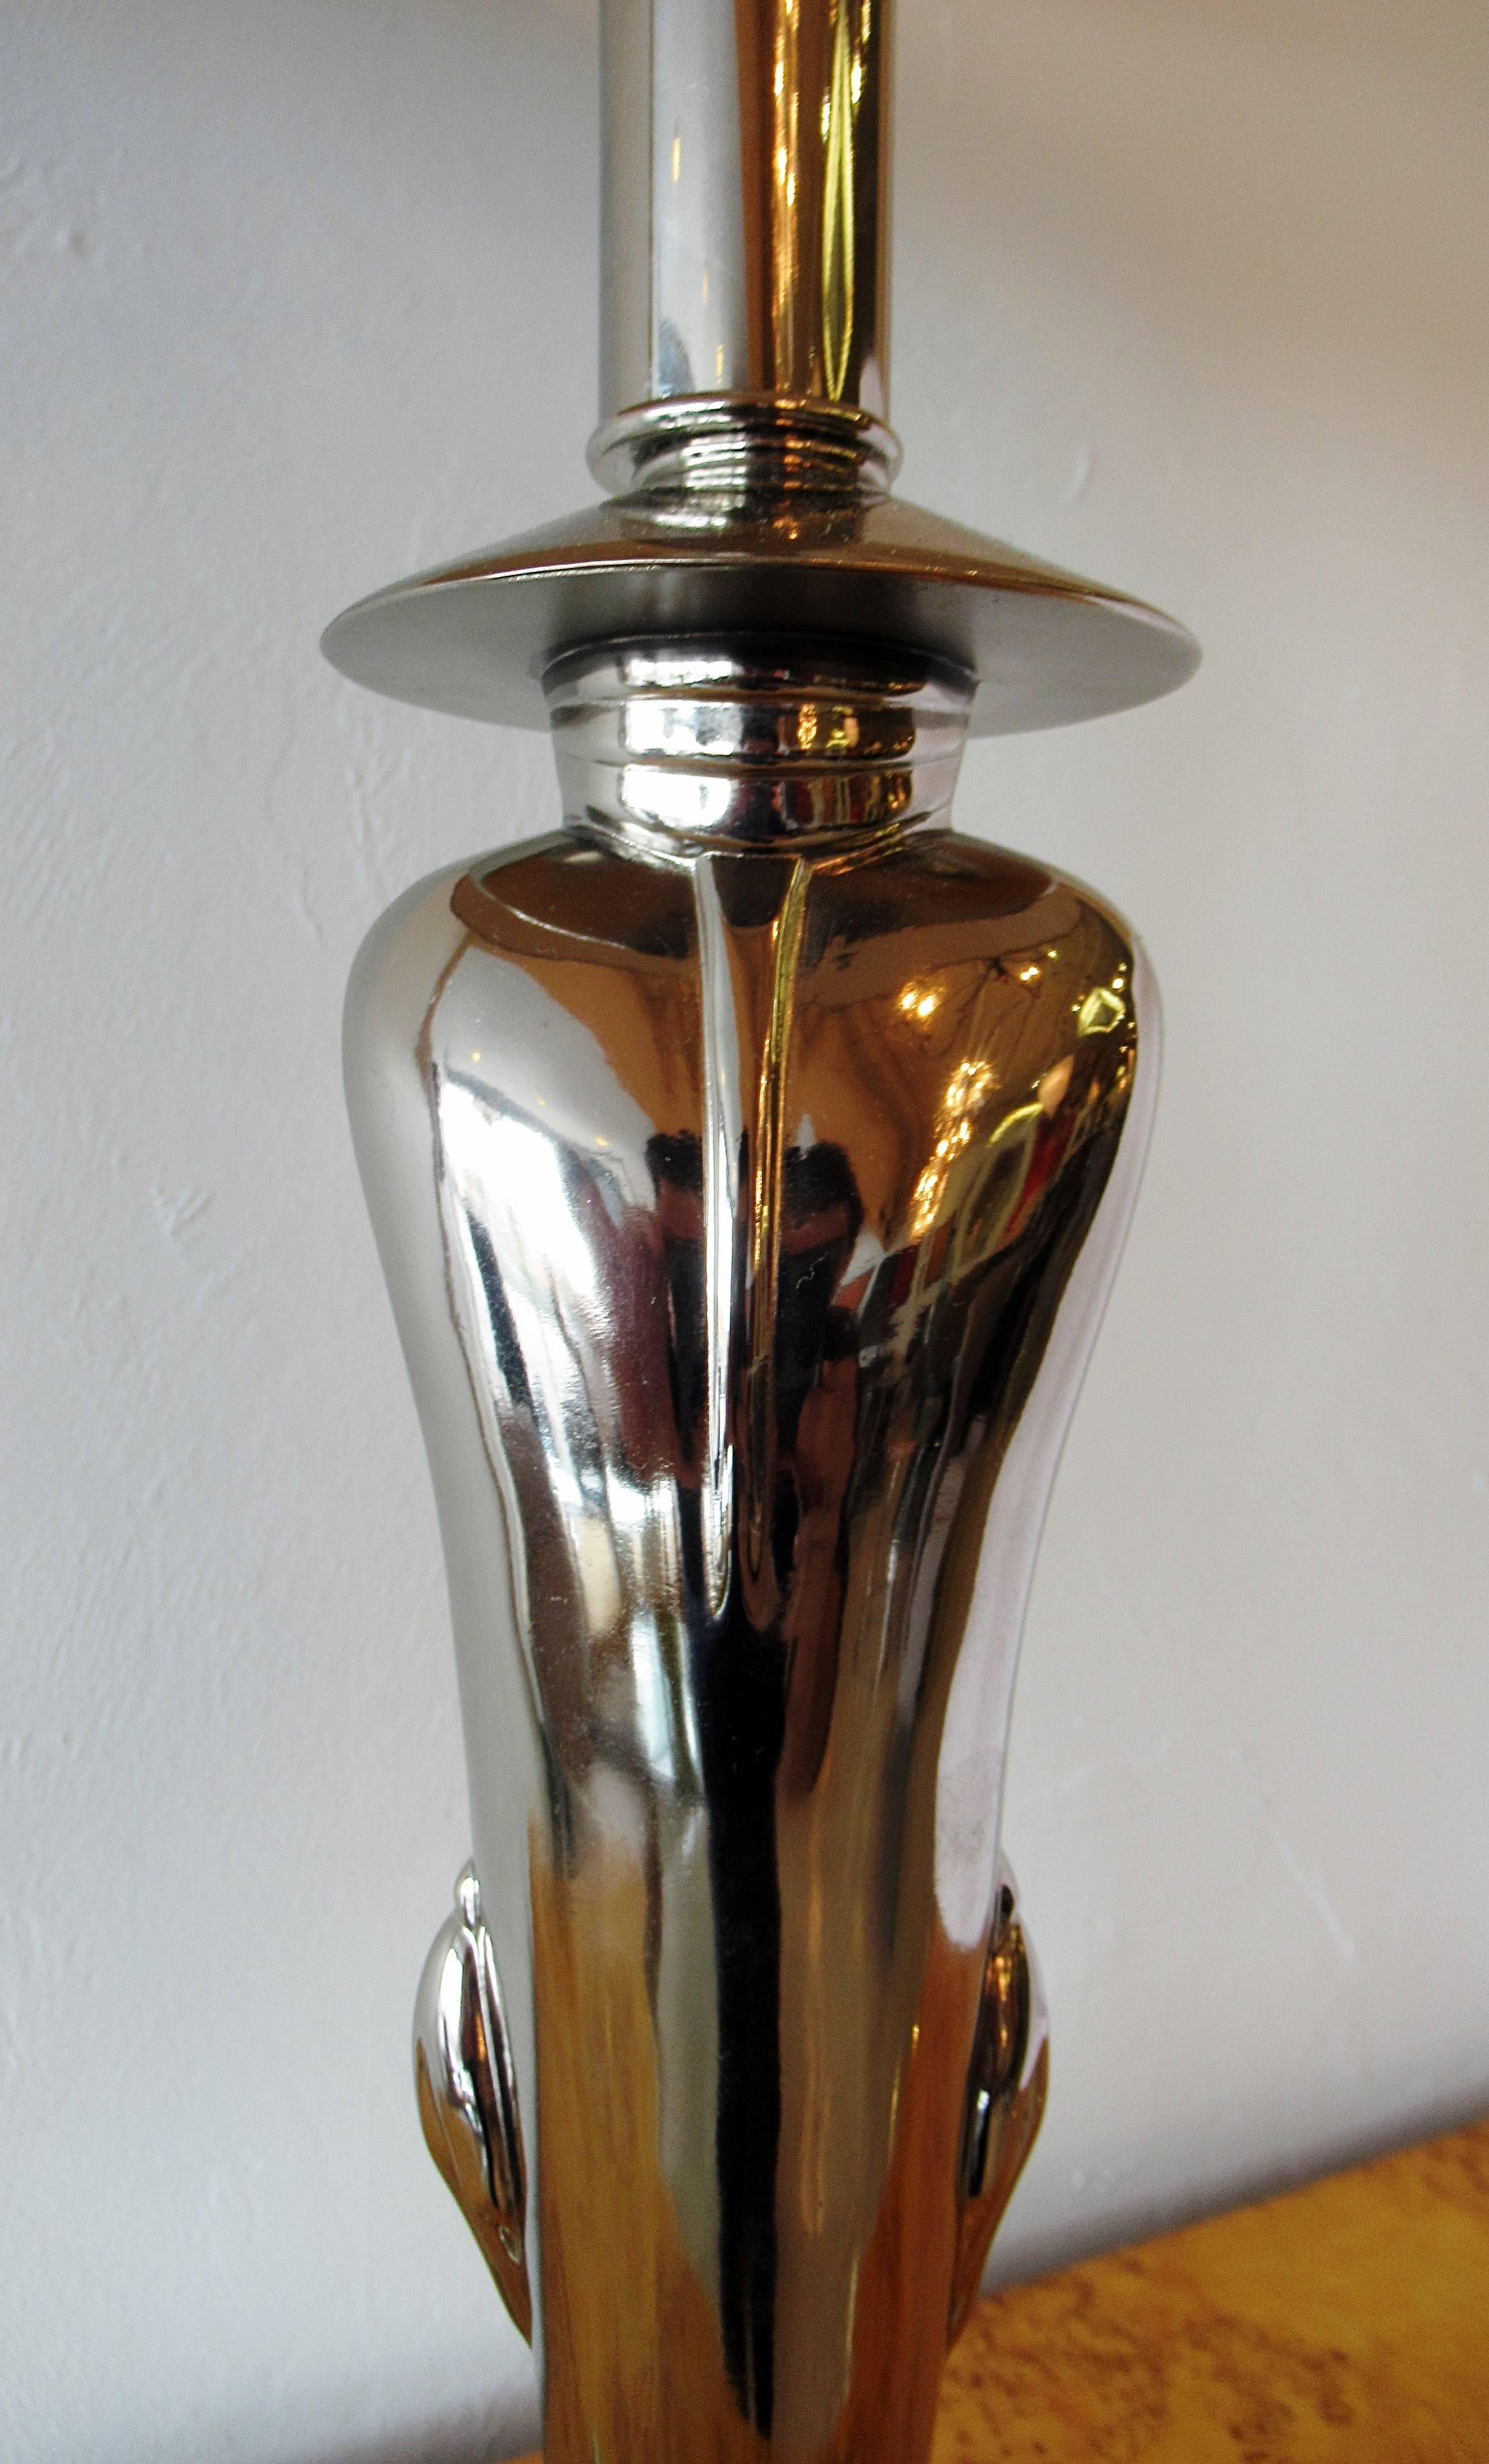 American Modern Chrome Table Lamps, Viktor Schreckengost, 1930s For Sale 4